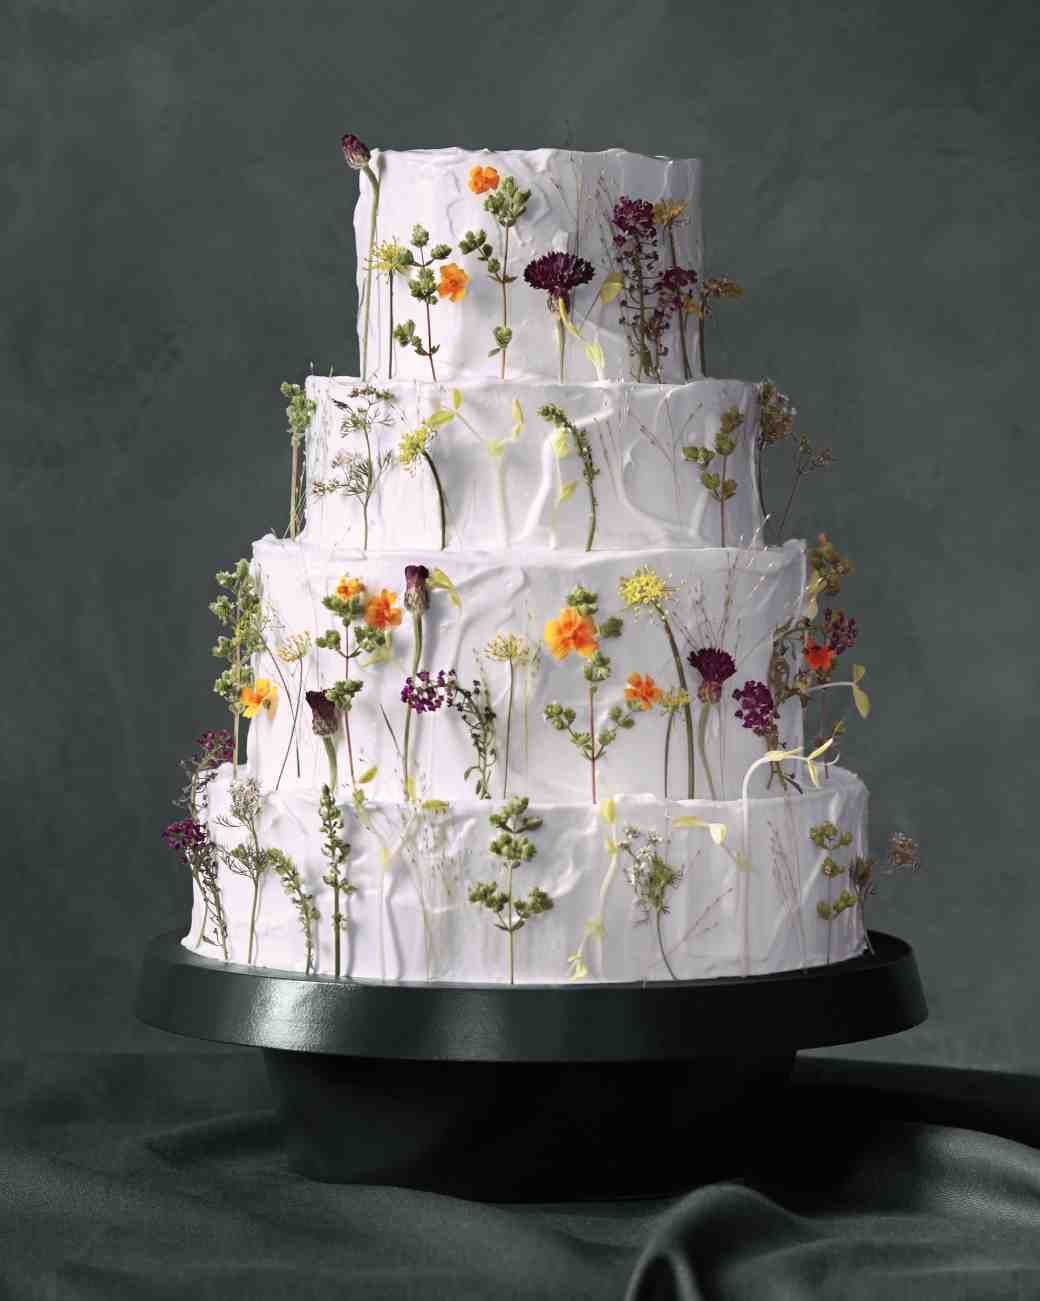 How To Decorate Wedding Cakes
 6 Fresh Ways to Decorate Wedding Cakes With Flowers